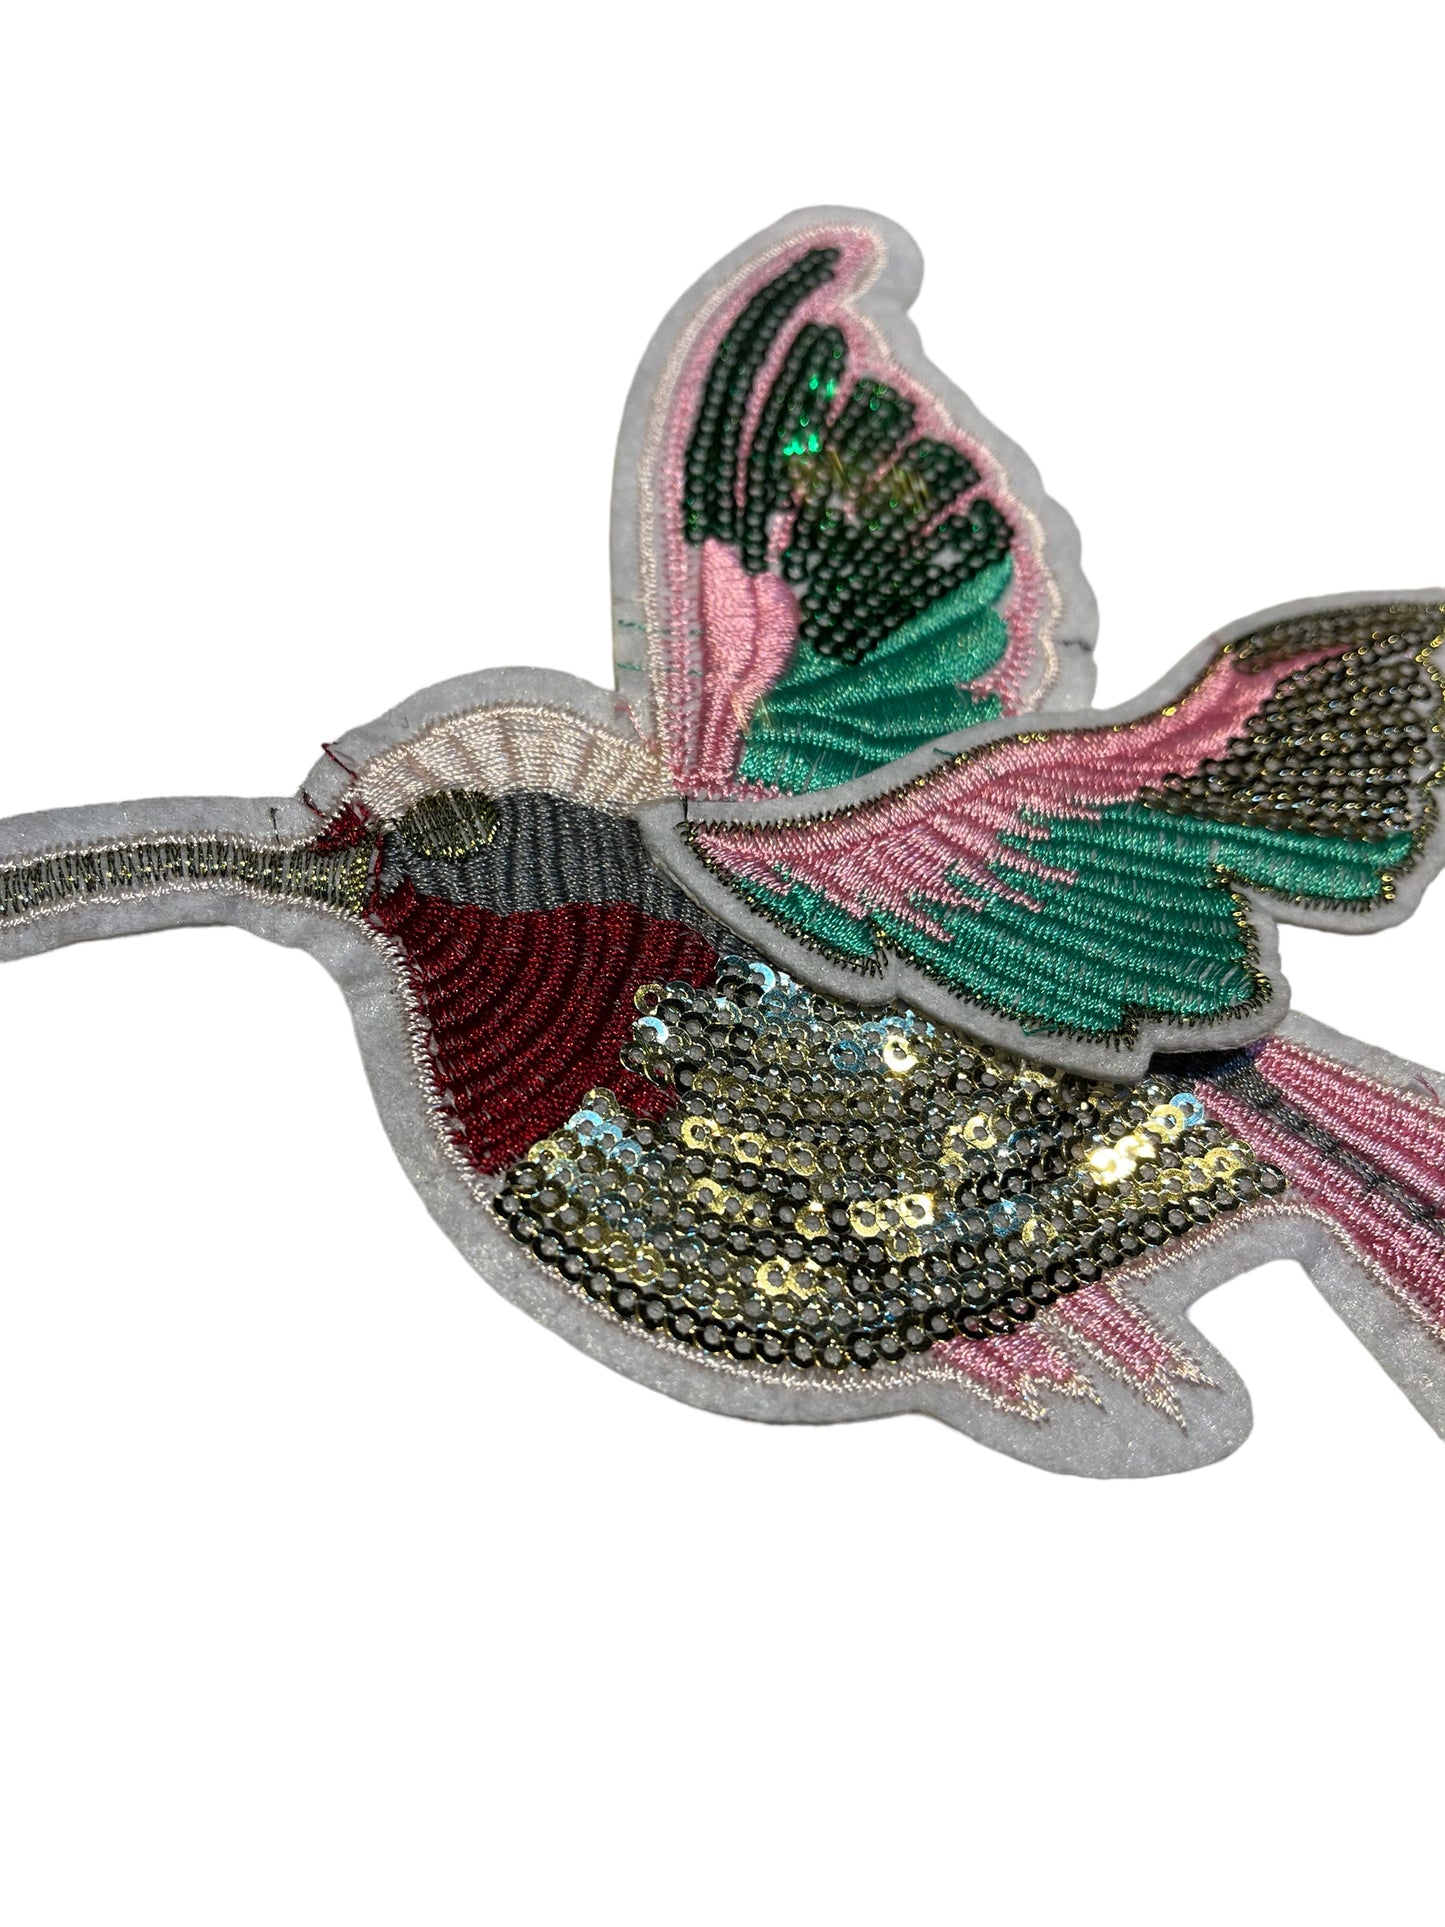 Parche bordado colibrí